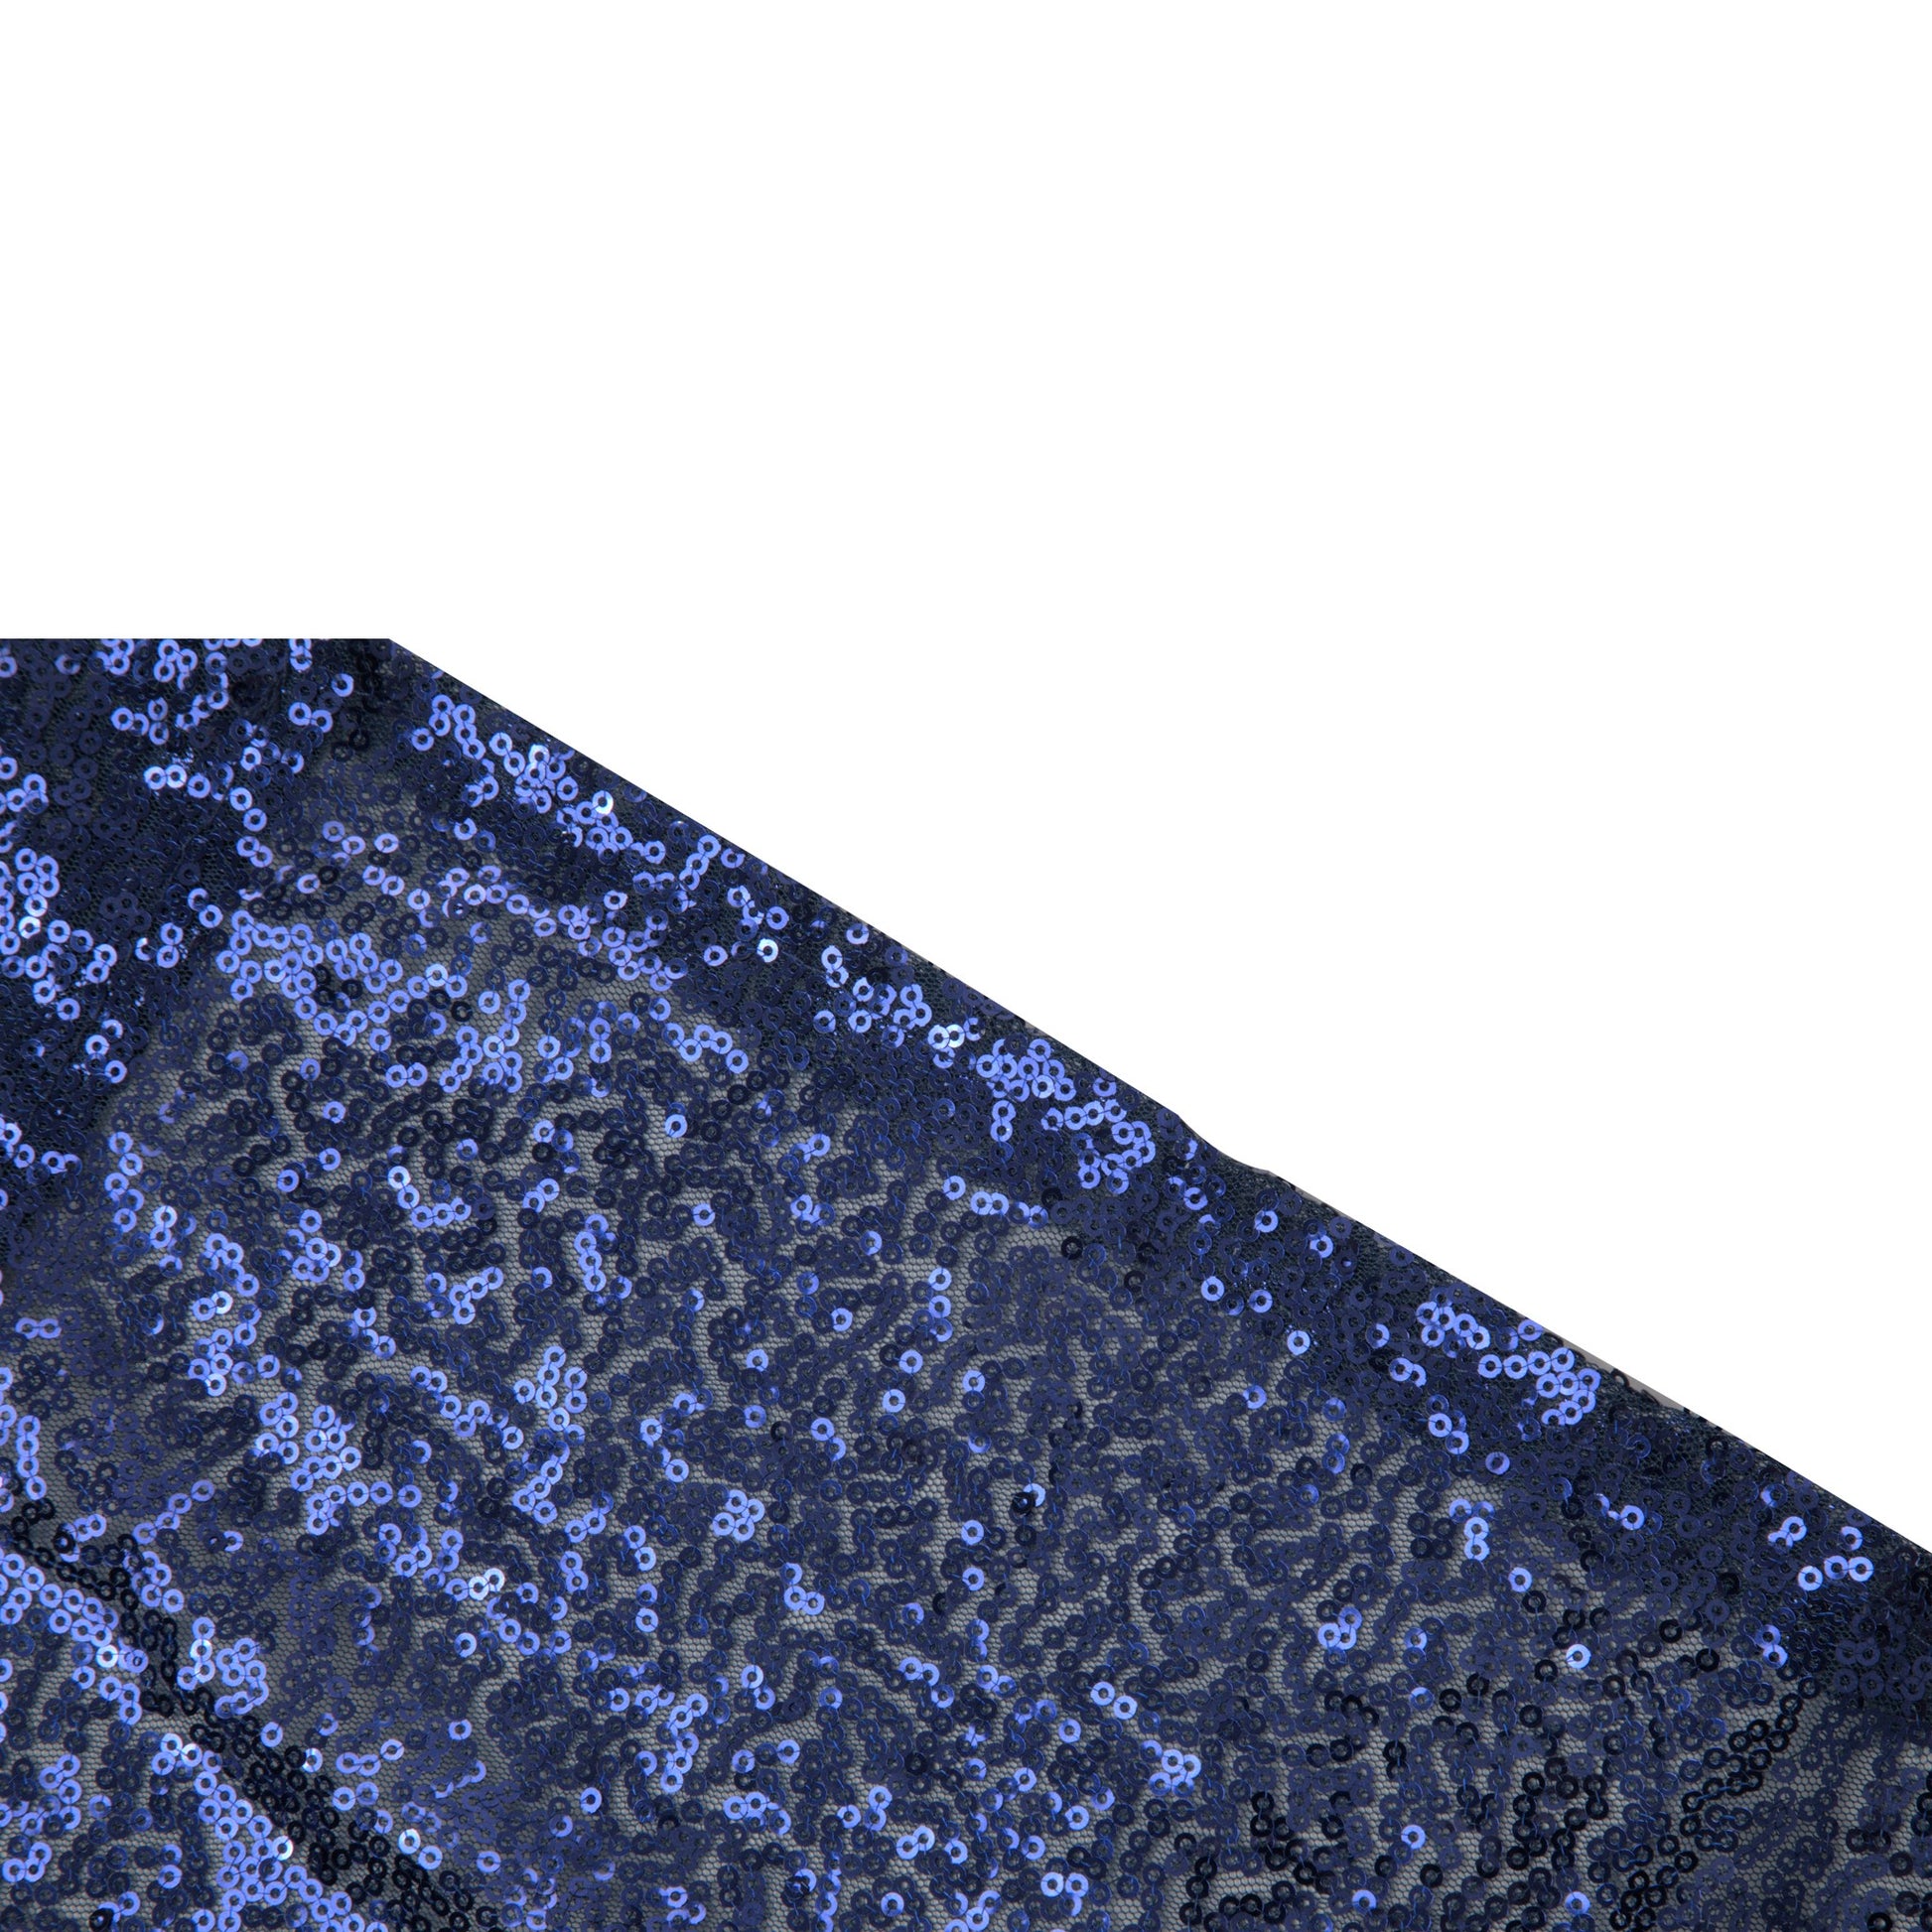 Glitz Sequin Mesh Net 10ft H x 52" W Drape/Backdrop panel - Navy Blue